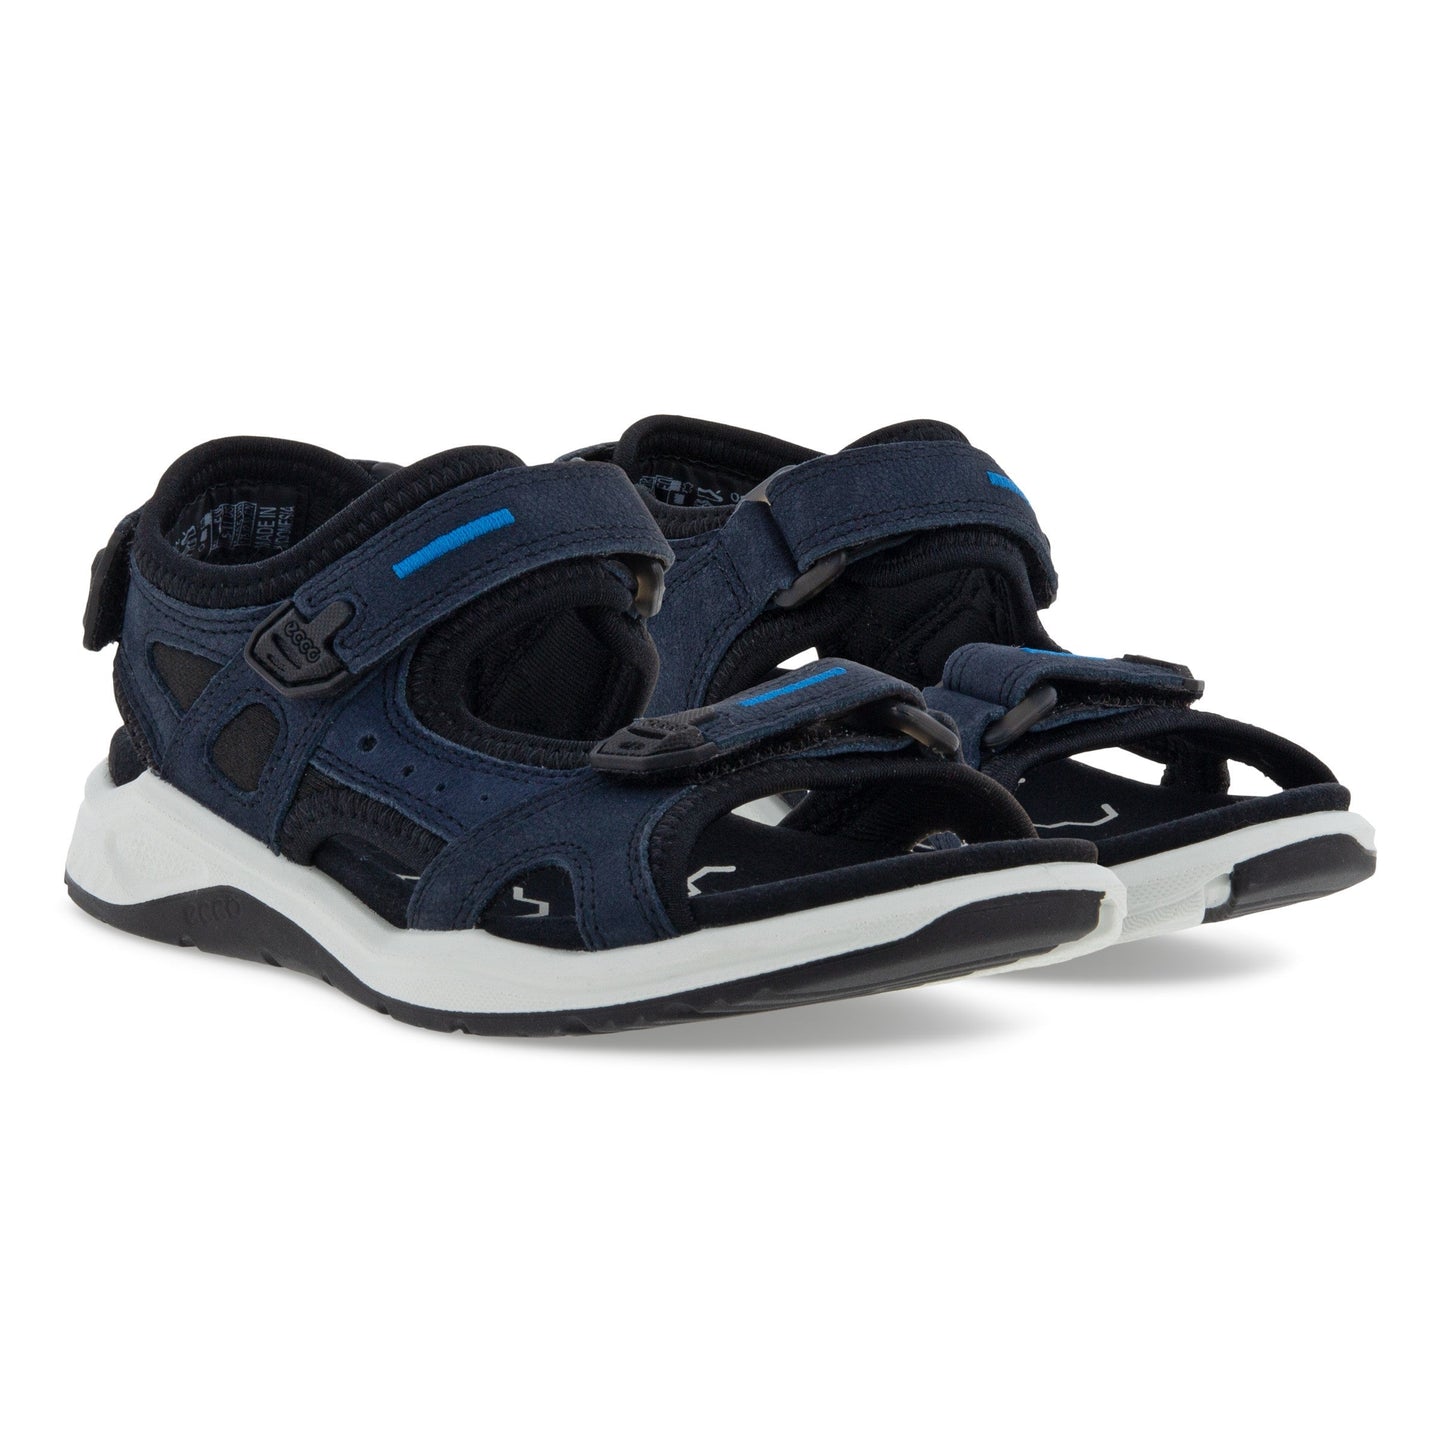 Ecco - X-Trinsic K sandal - 48-0228 - Blå